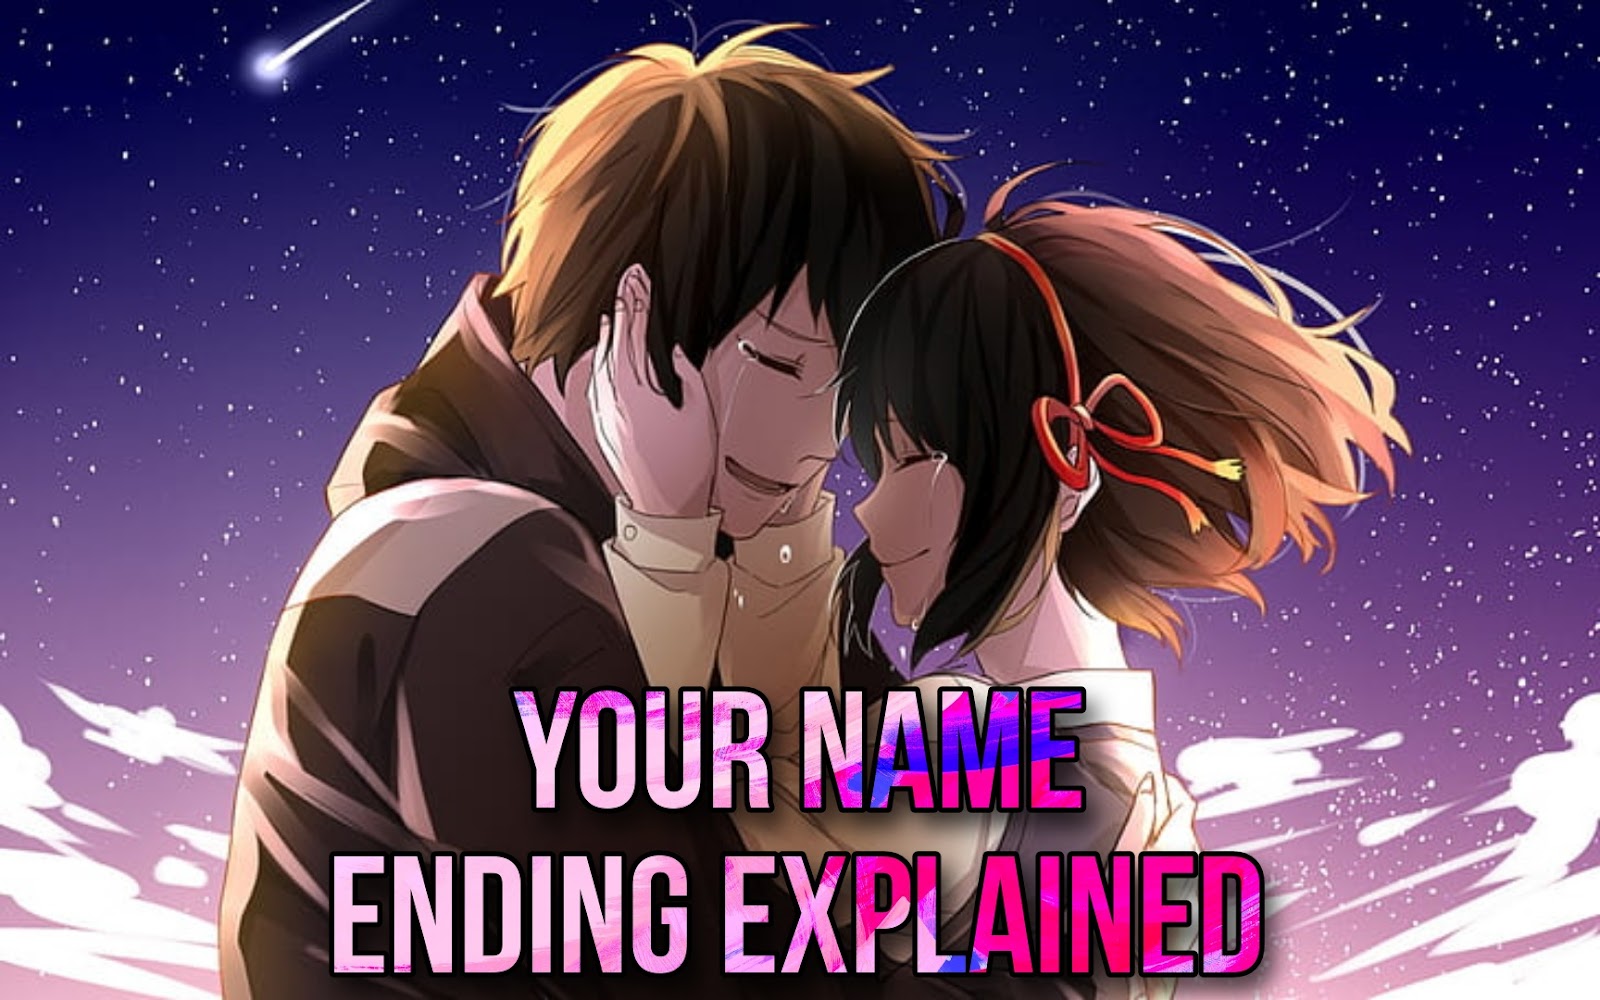 A colossal explanation of Your Name (Kimi no Na wa) - Colossus